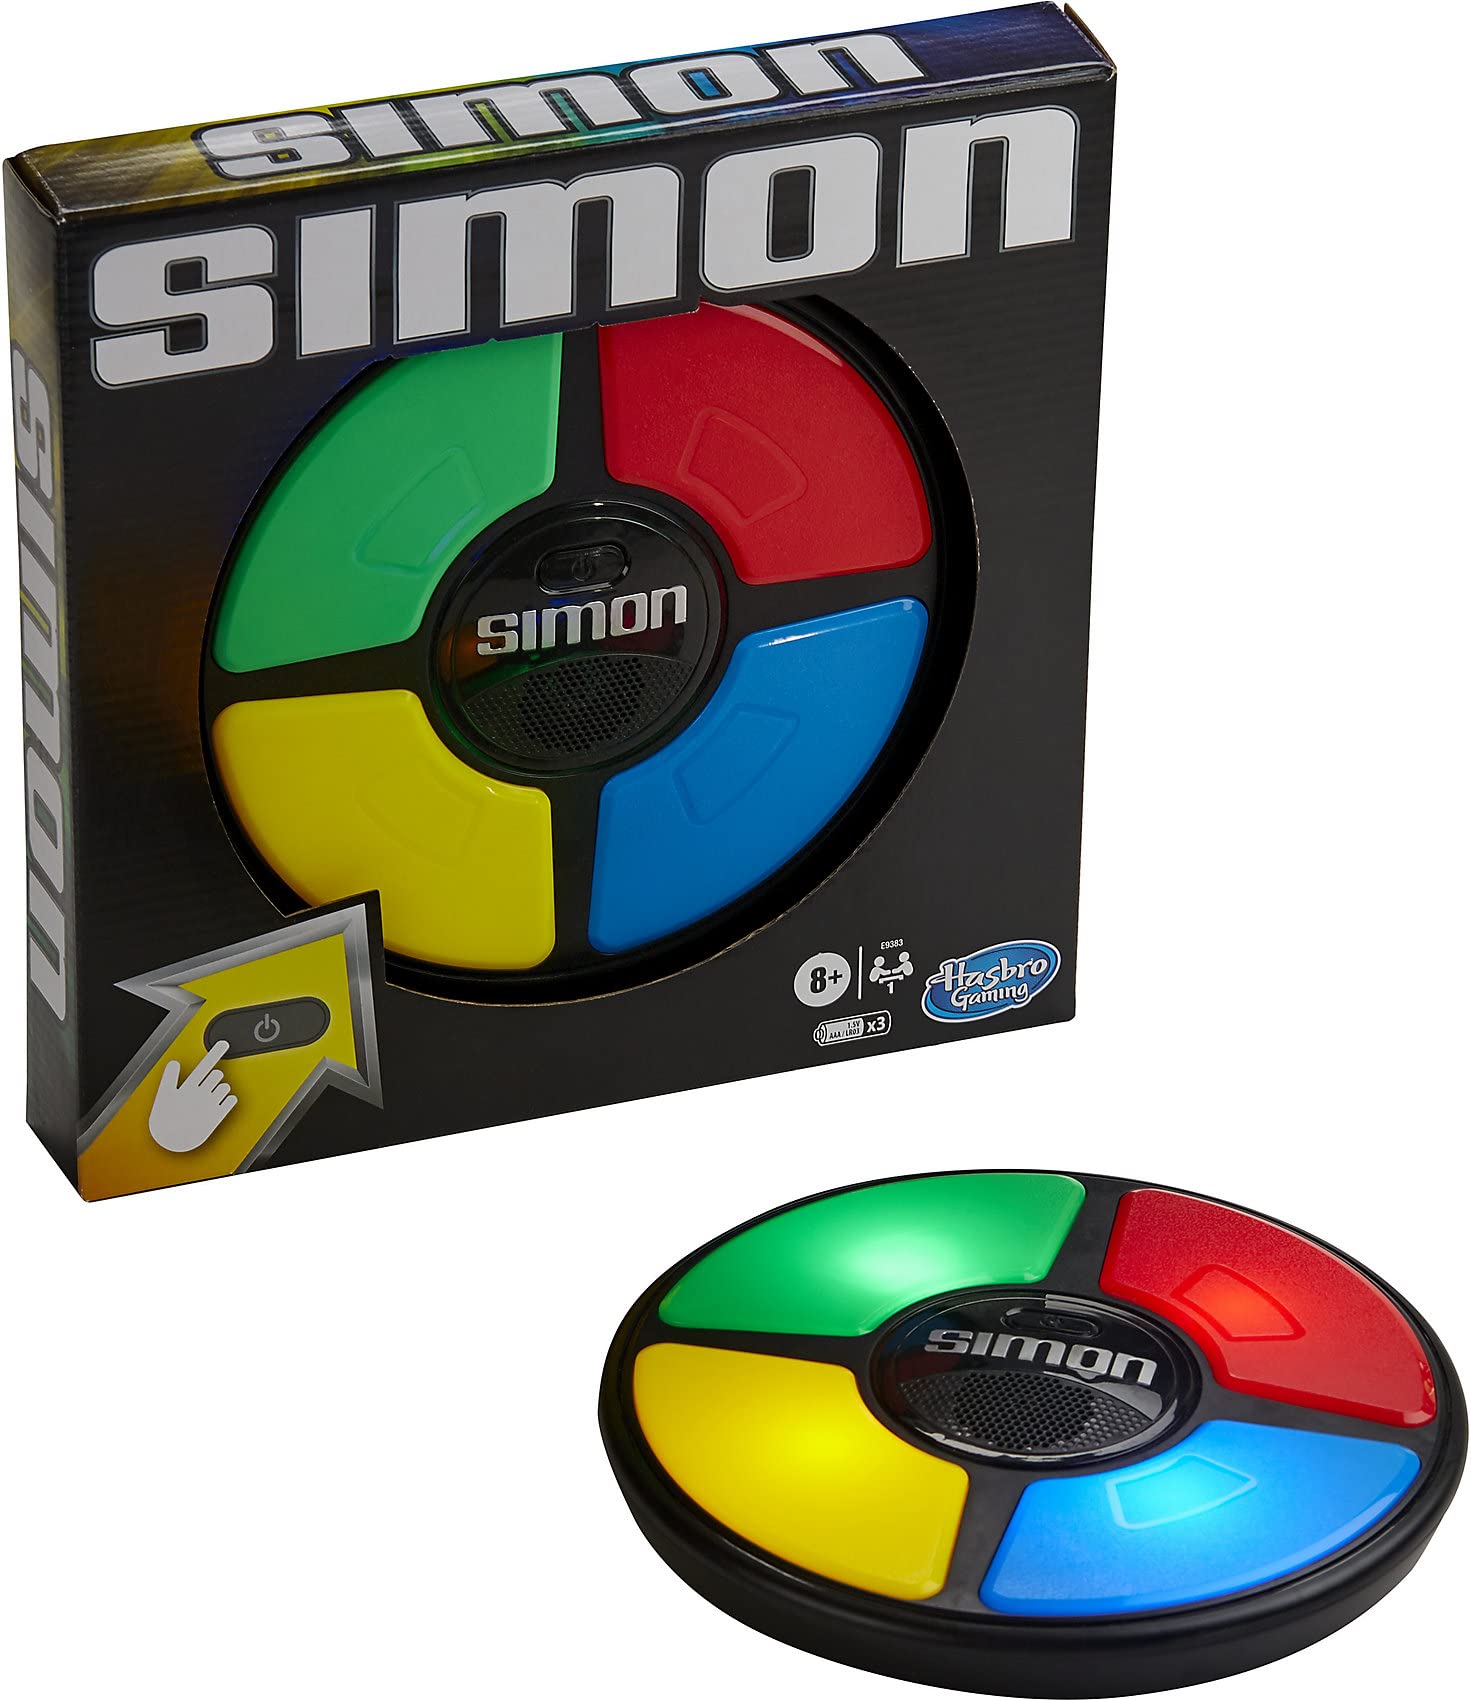 Simon Handheld Electronic Memory Game